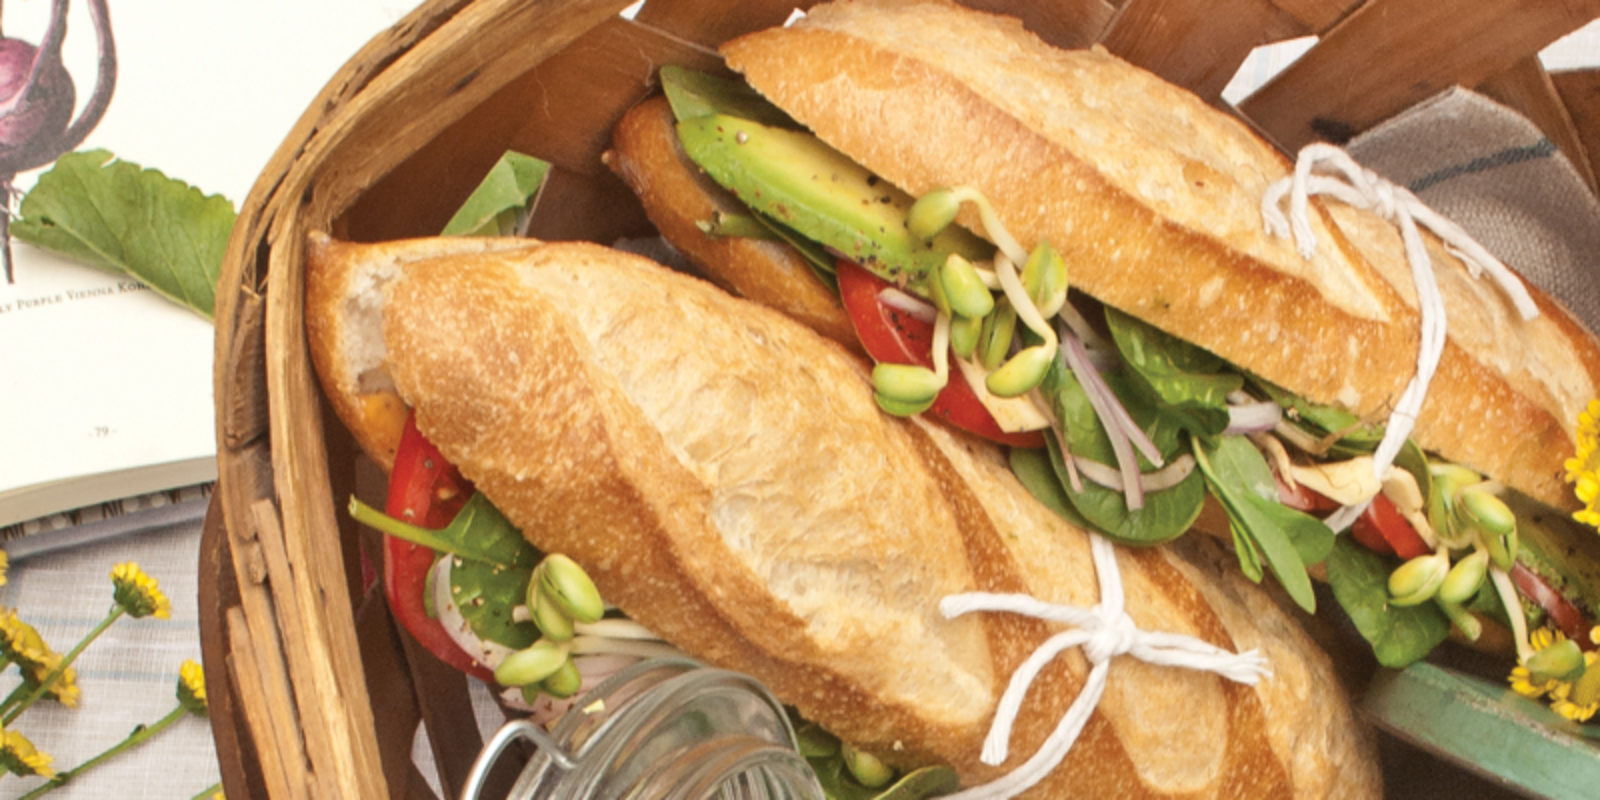 Baguette sandwiches in a picnic basket